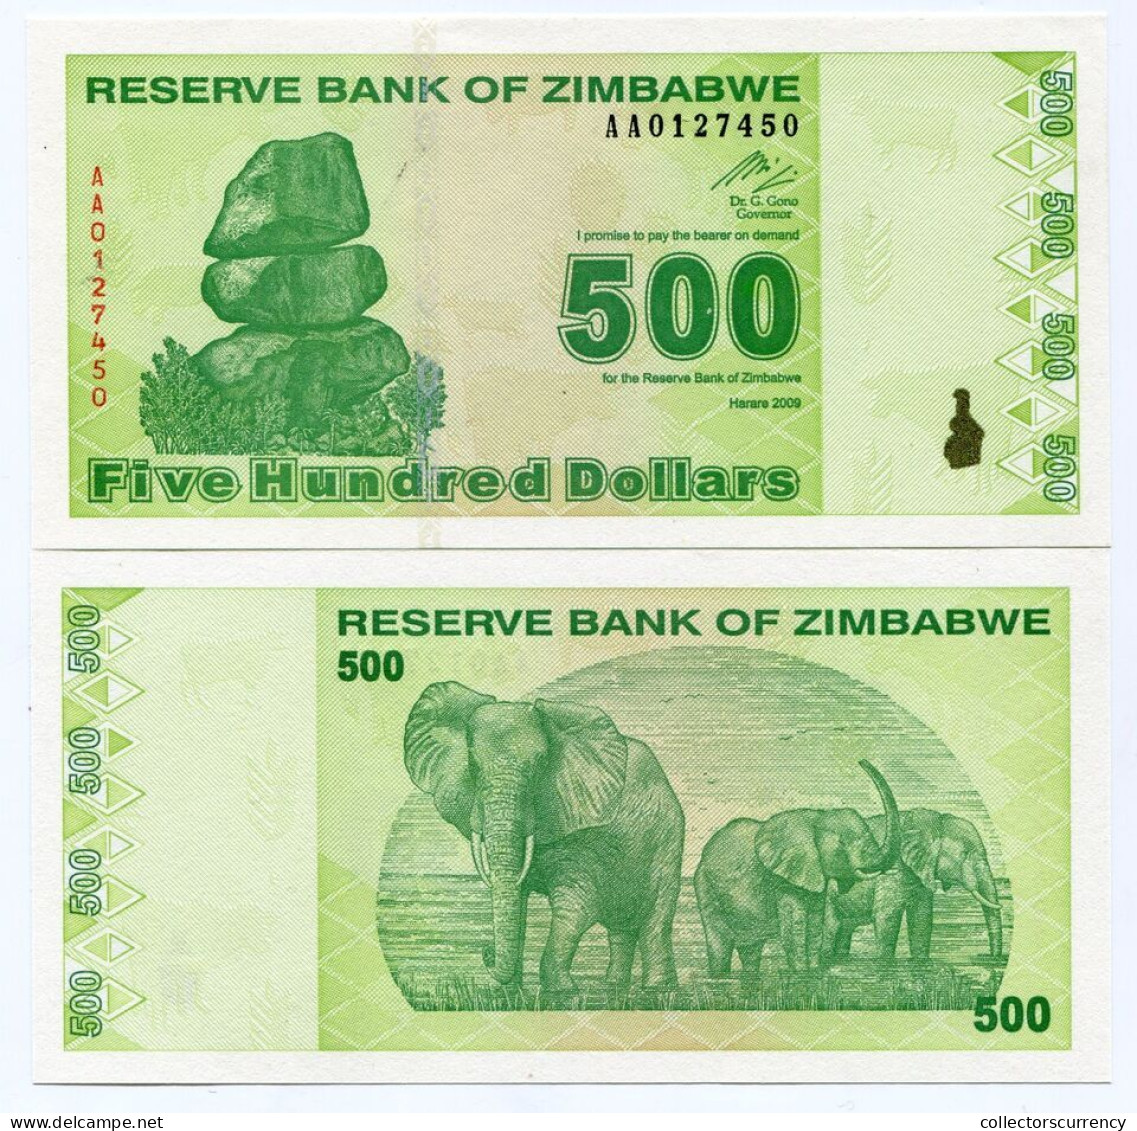 ZIMBABWE 2009  500 DOLLARS  UNCIRCULATED BRAND NEW NOTE - EQUIVALENT TO PREVIOUS  50000 Trillion  AA Prefix  P 98 X 5 Pi - Simbabwe